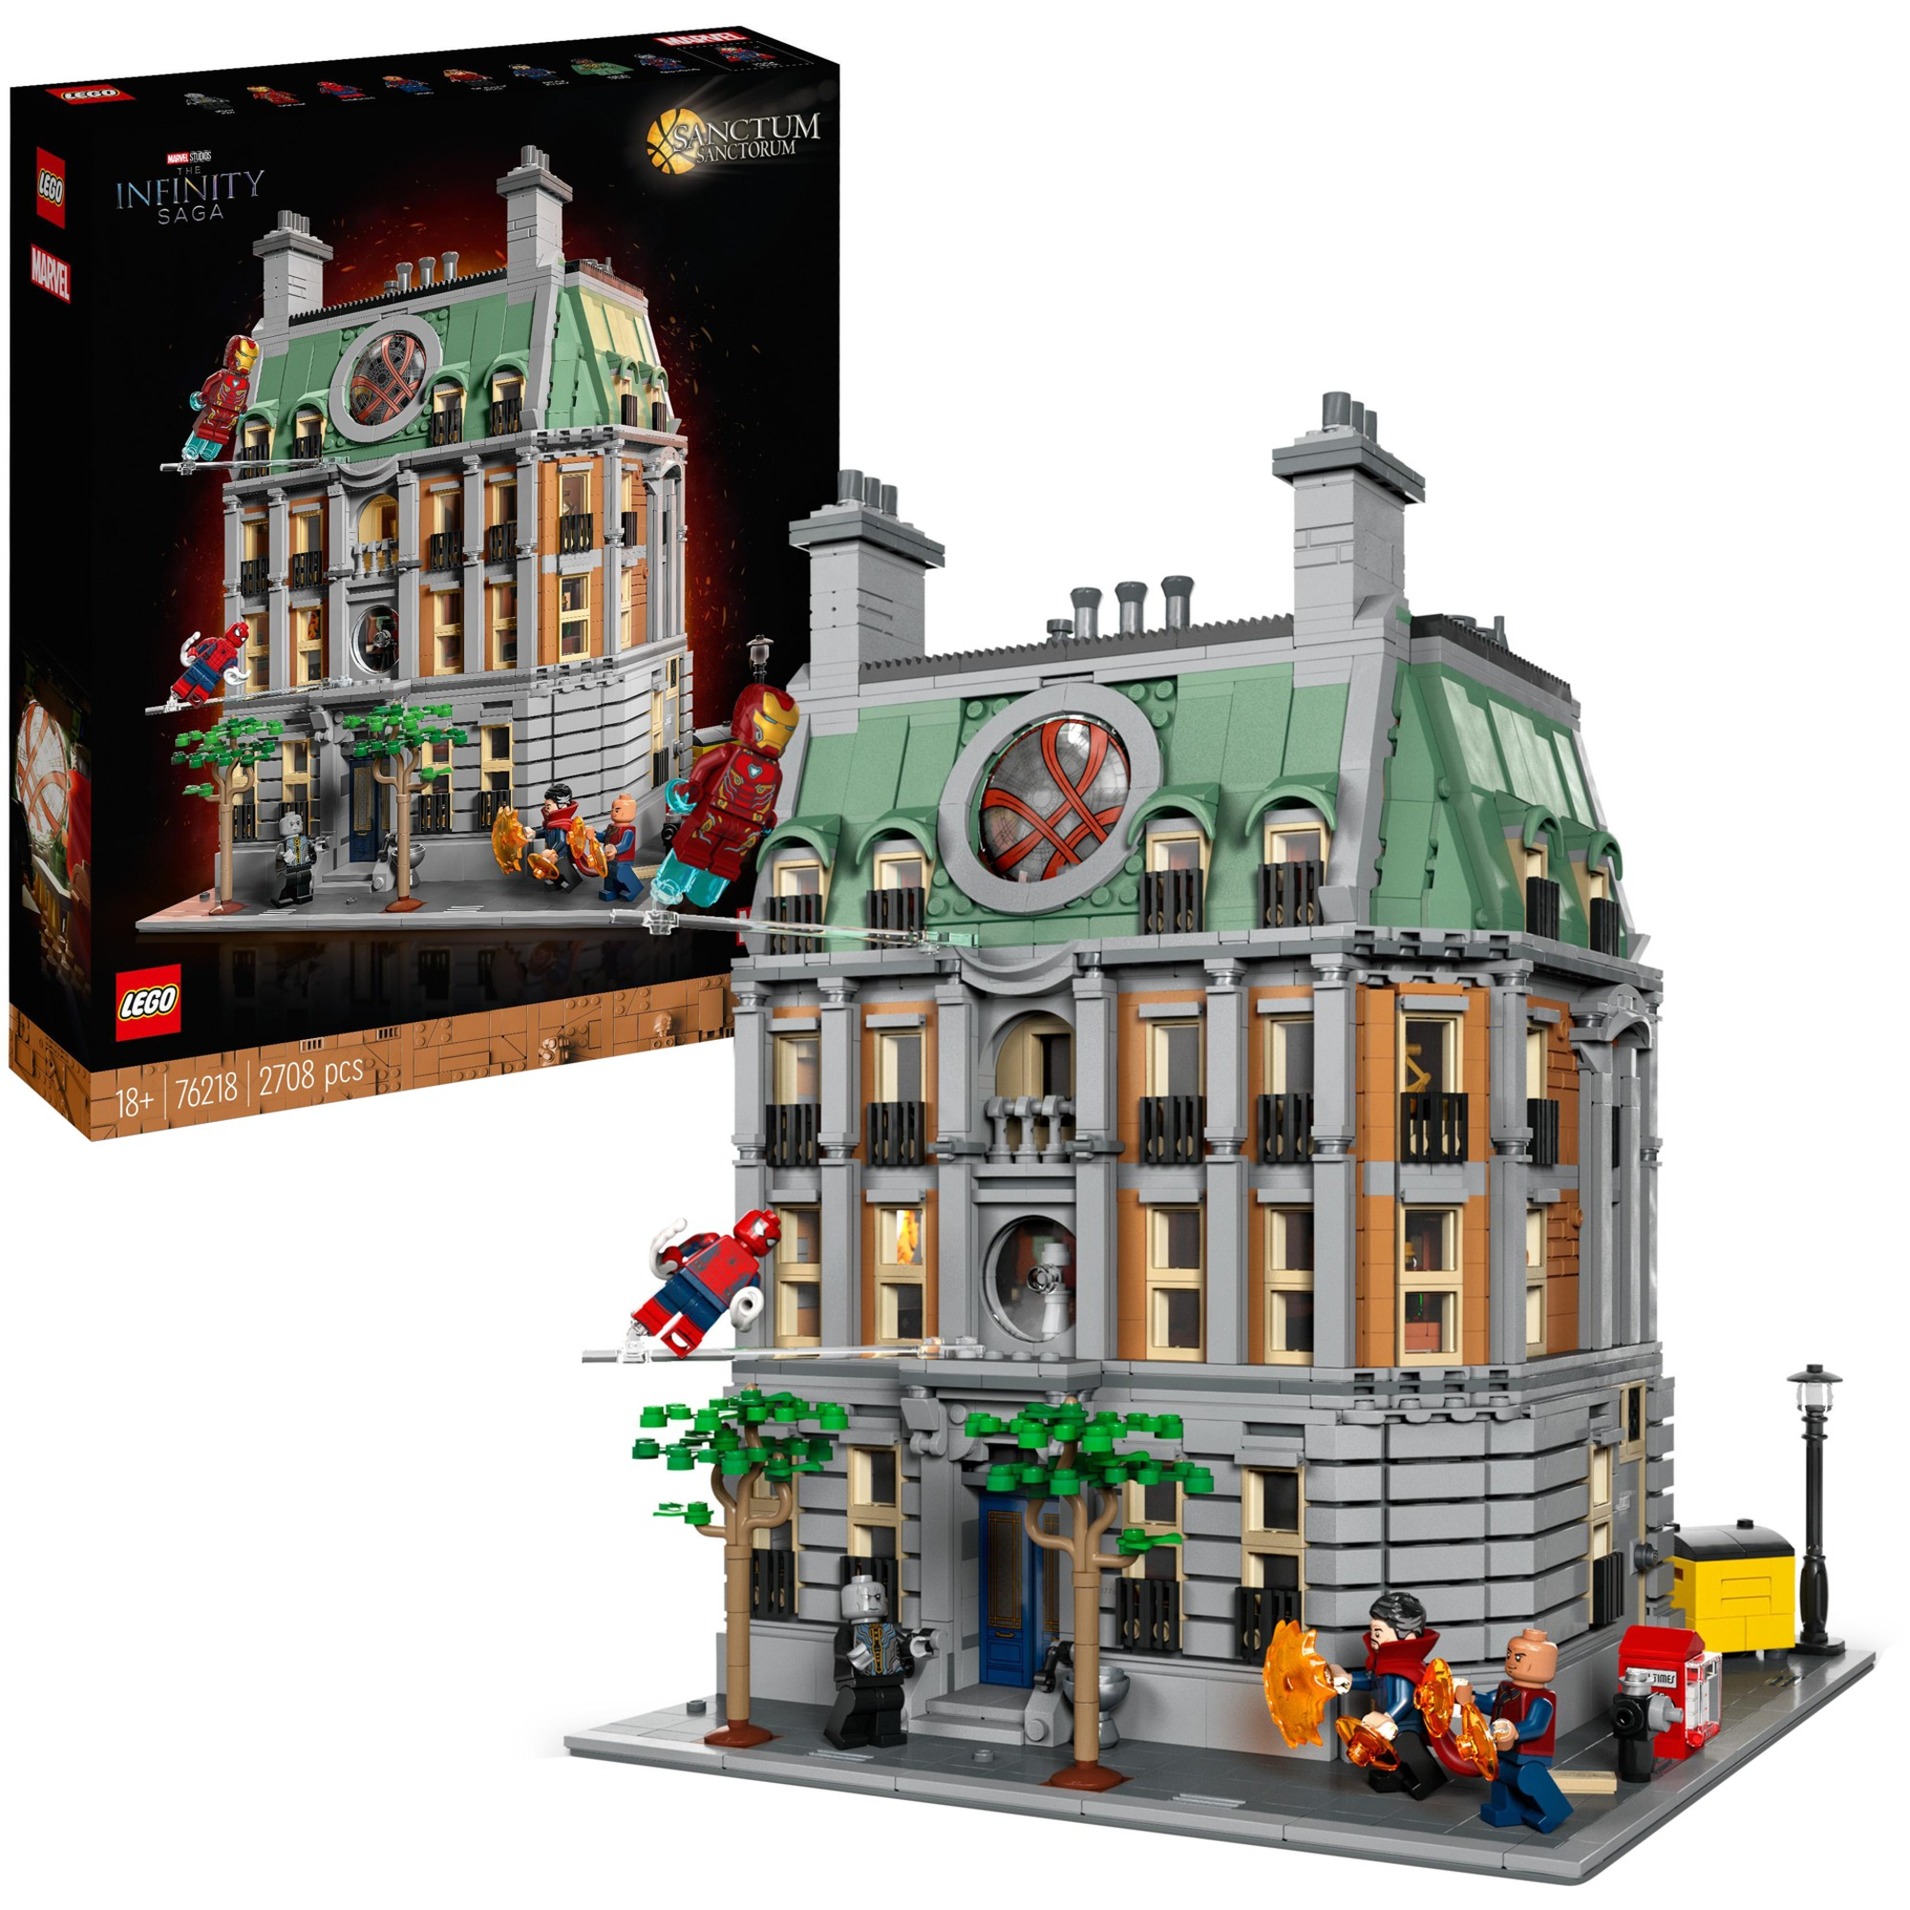 Spielzeug: Lego 76218 Marvel Super Heroes Sanctum Sanctorum